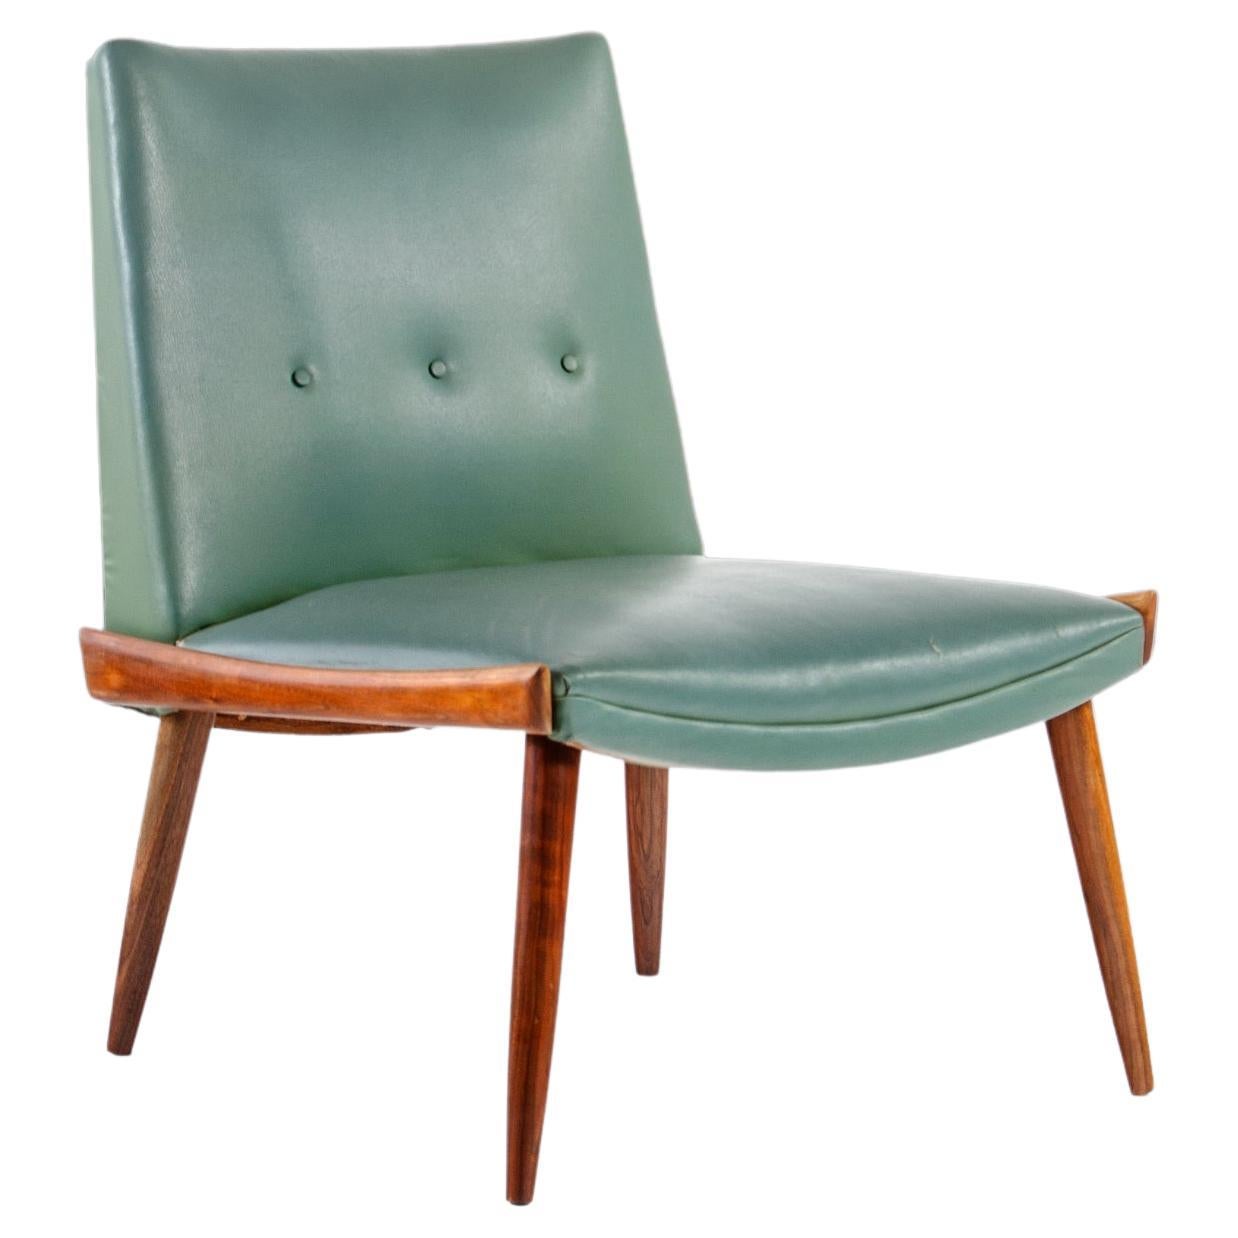 MCM Slipper Chair in Walnut & Original Green Fabric by Kroehler, USA, c. 1960's